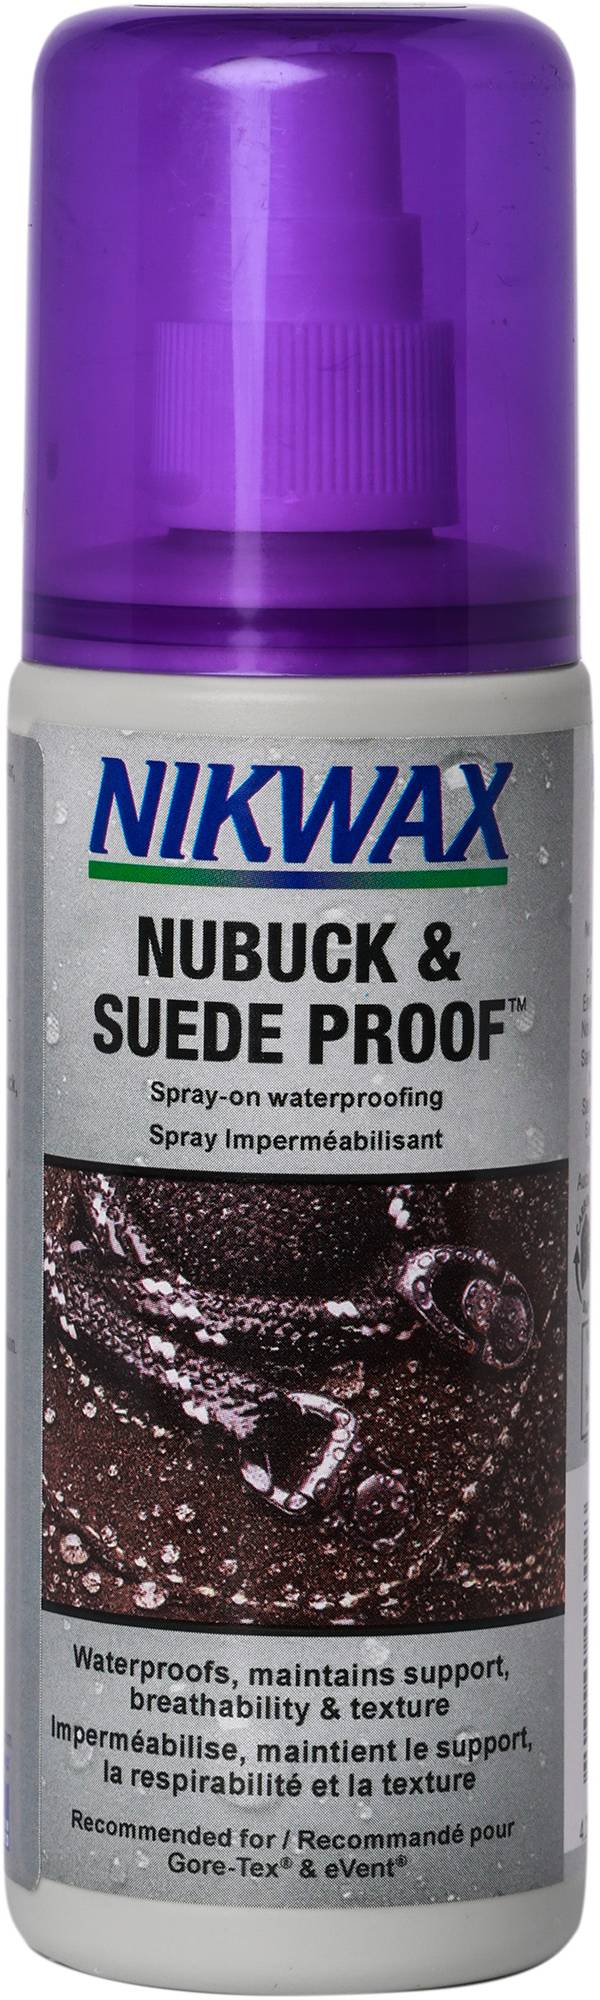 Nikwax Nubuck & Suede Proof Spray-On Protector product image